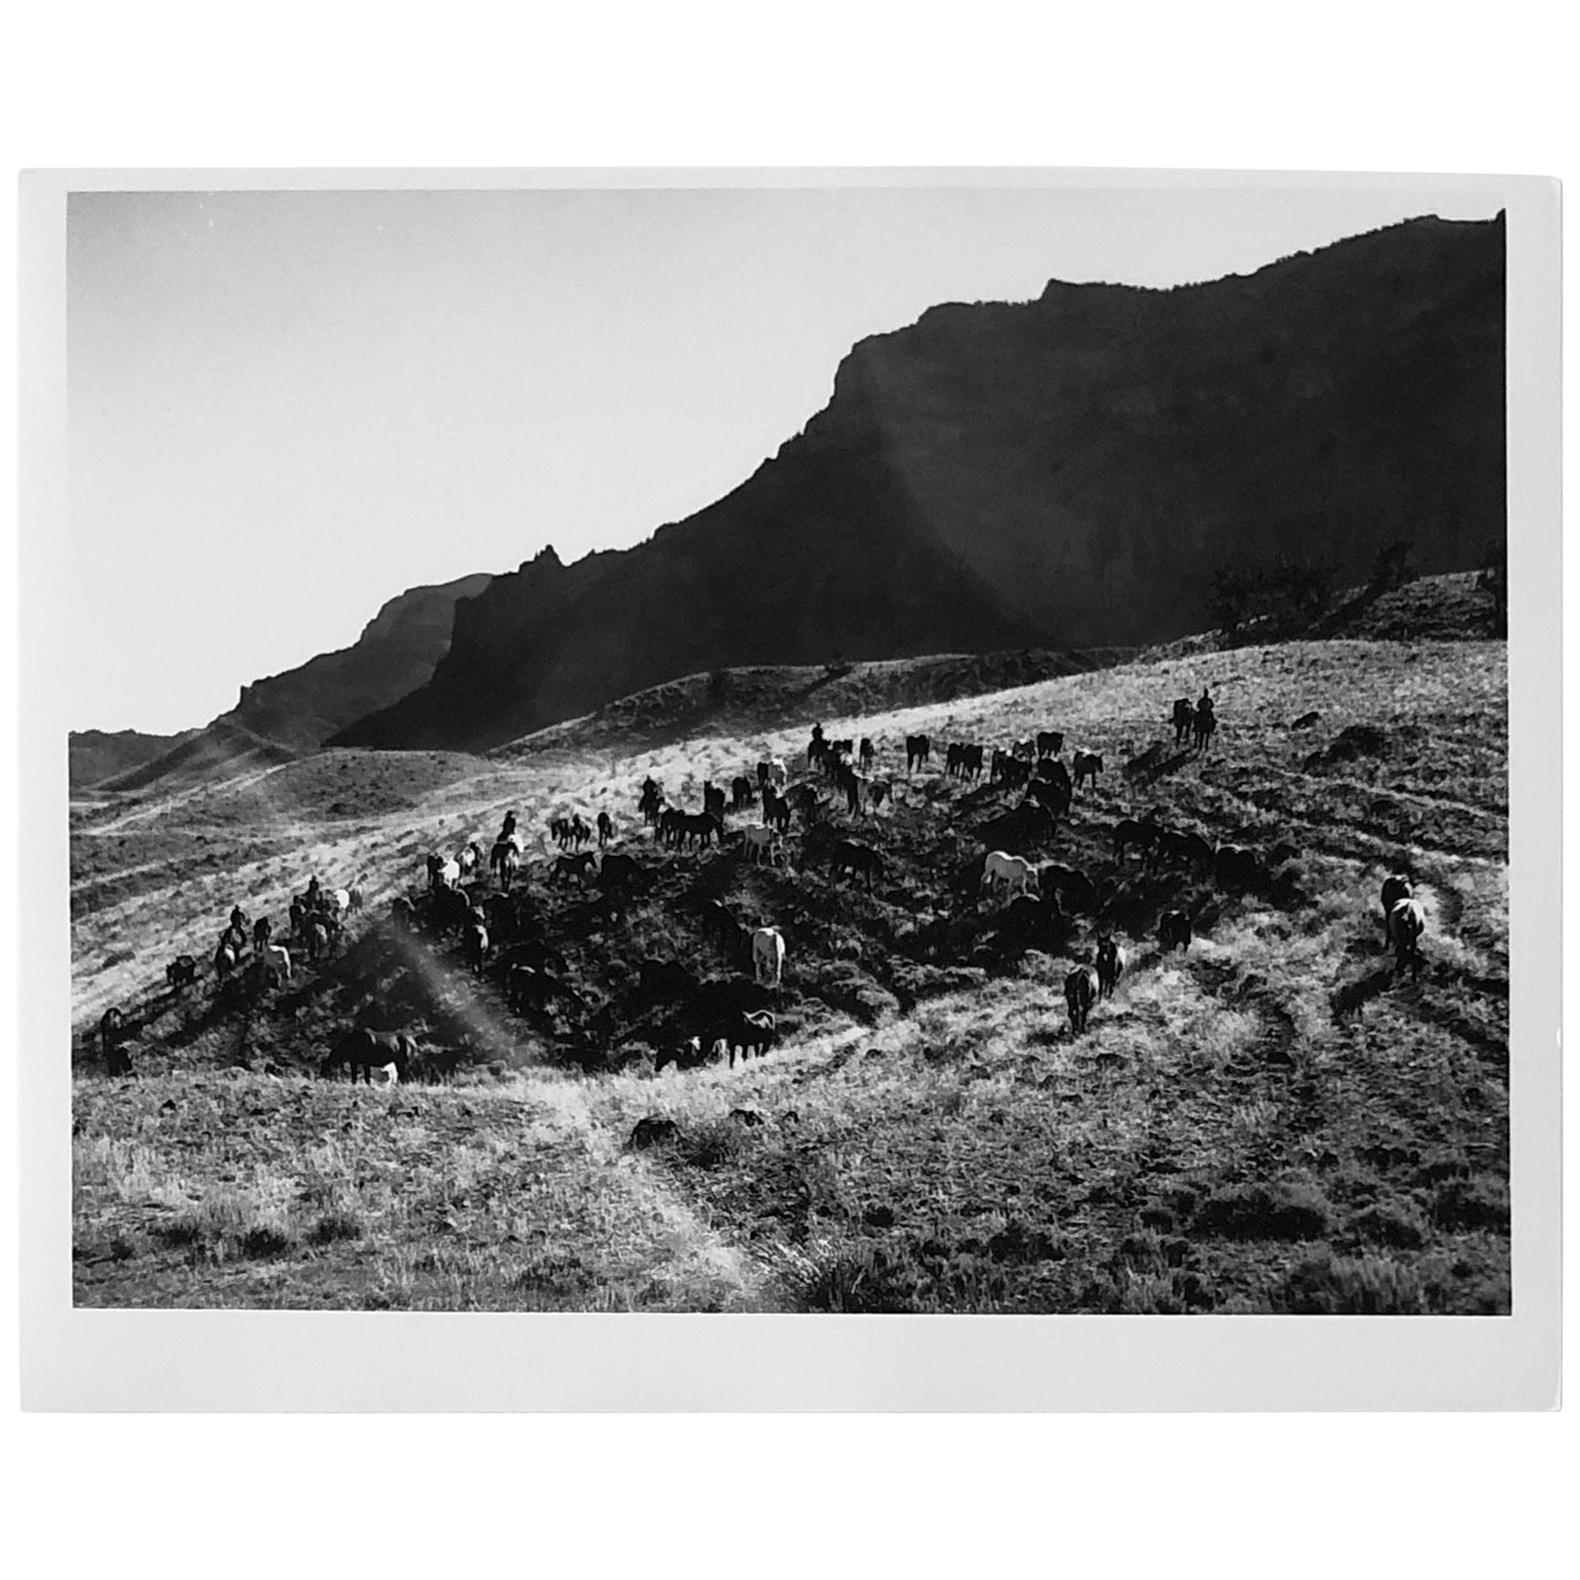 Martin Munkacsi Black and White Photograph - Horses with Mountains, Silver Gelatin Print, Landscape Photography